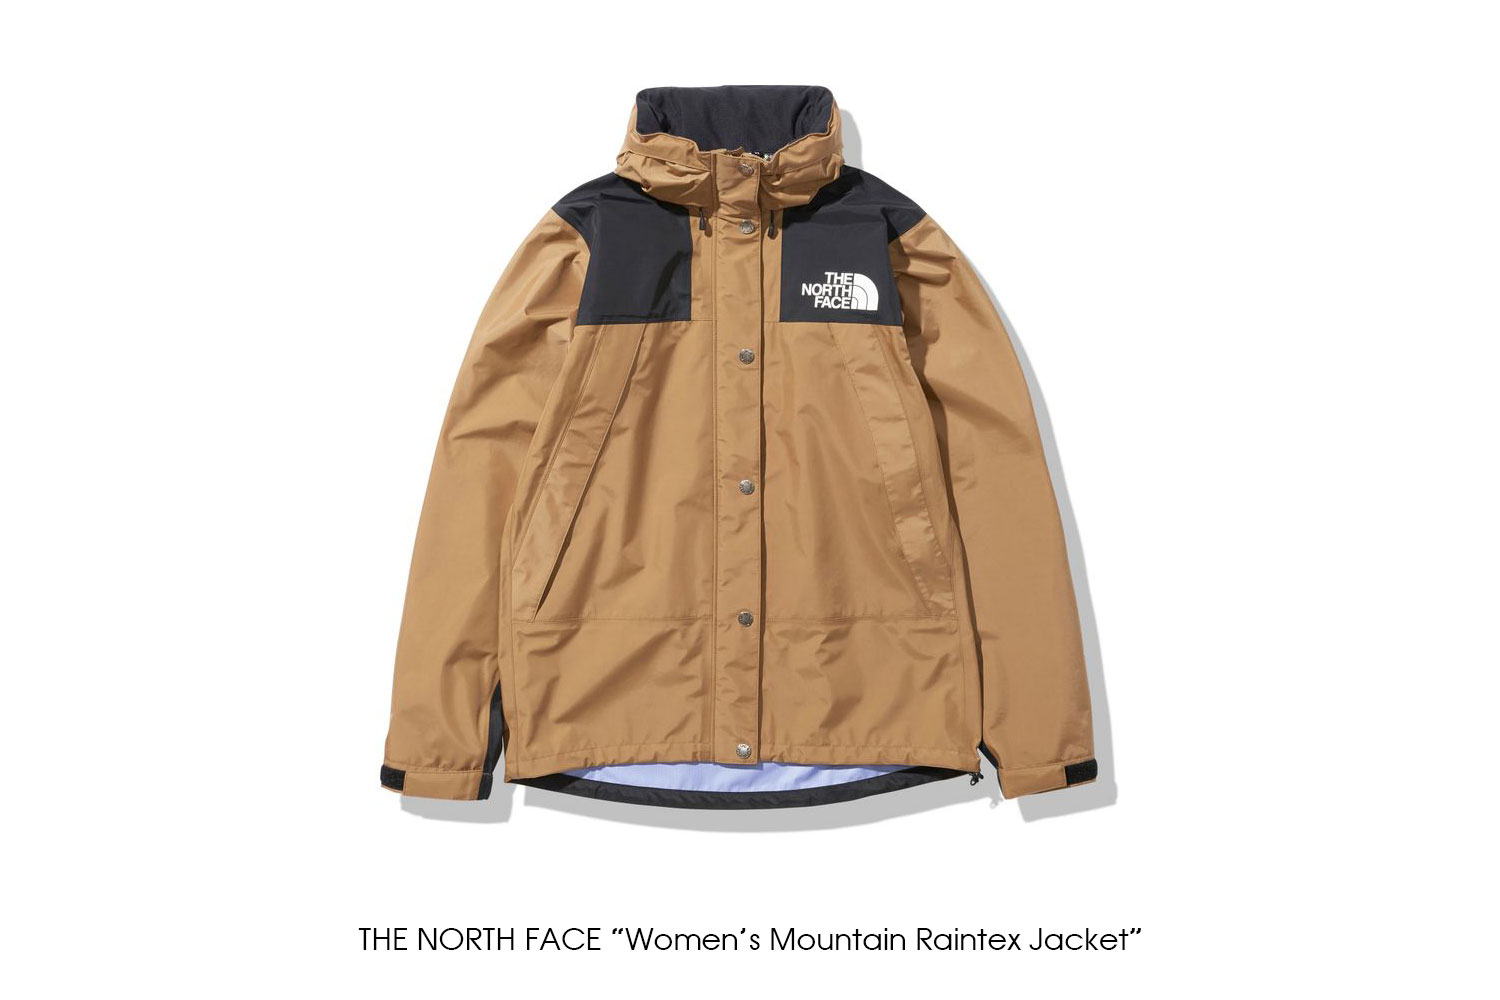 THE NORTH FACE "Women's Mountain Raintex Jacket"